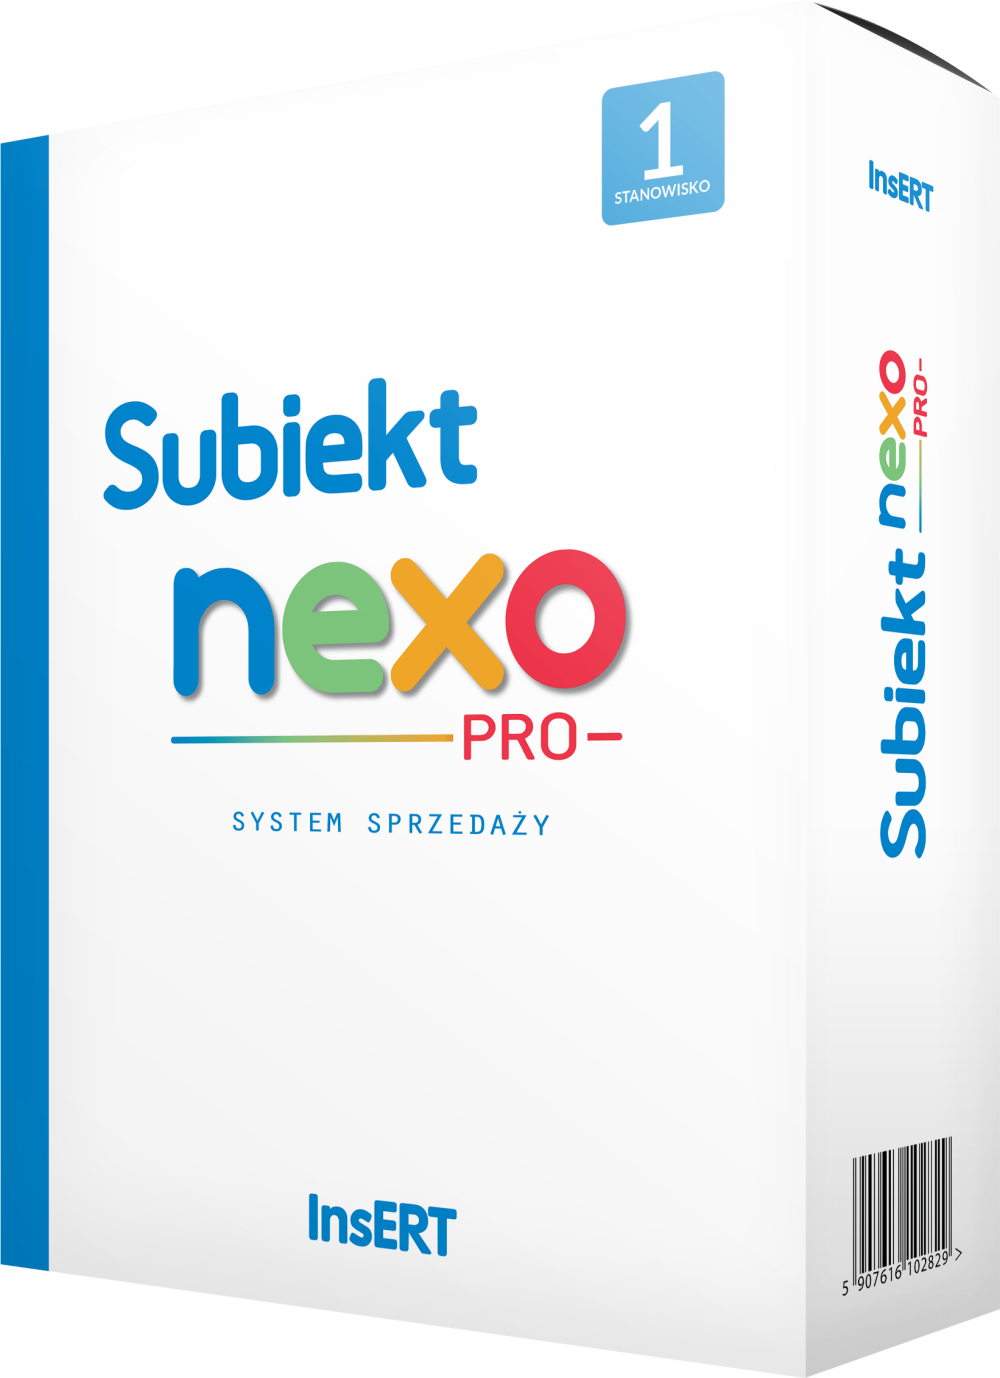 Subiekt_nexo_PRO_1_stanowisko_pudelko_dsgsoftware